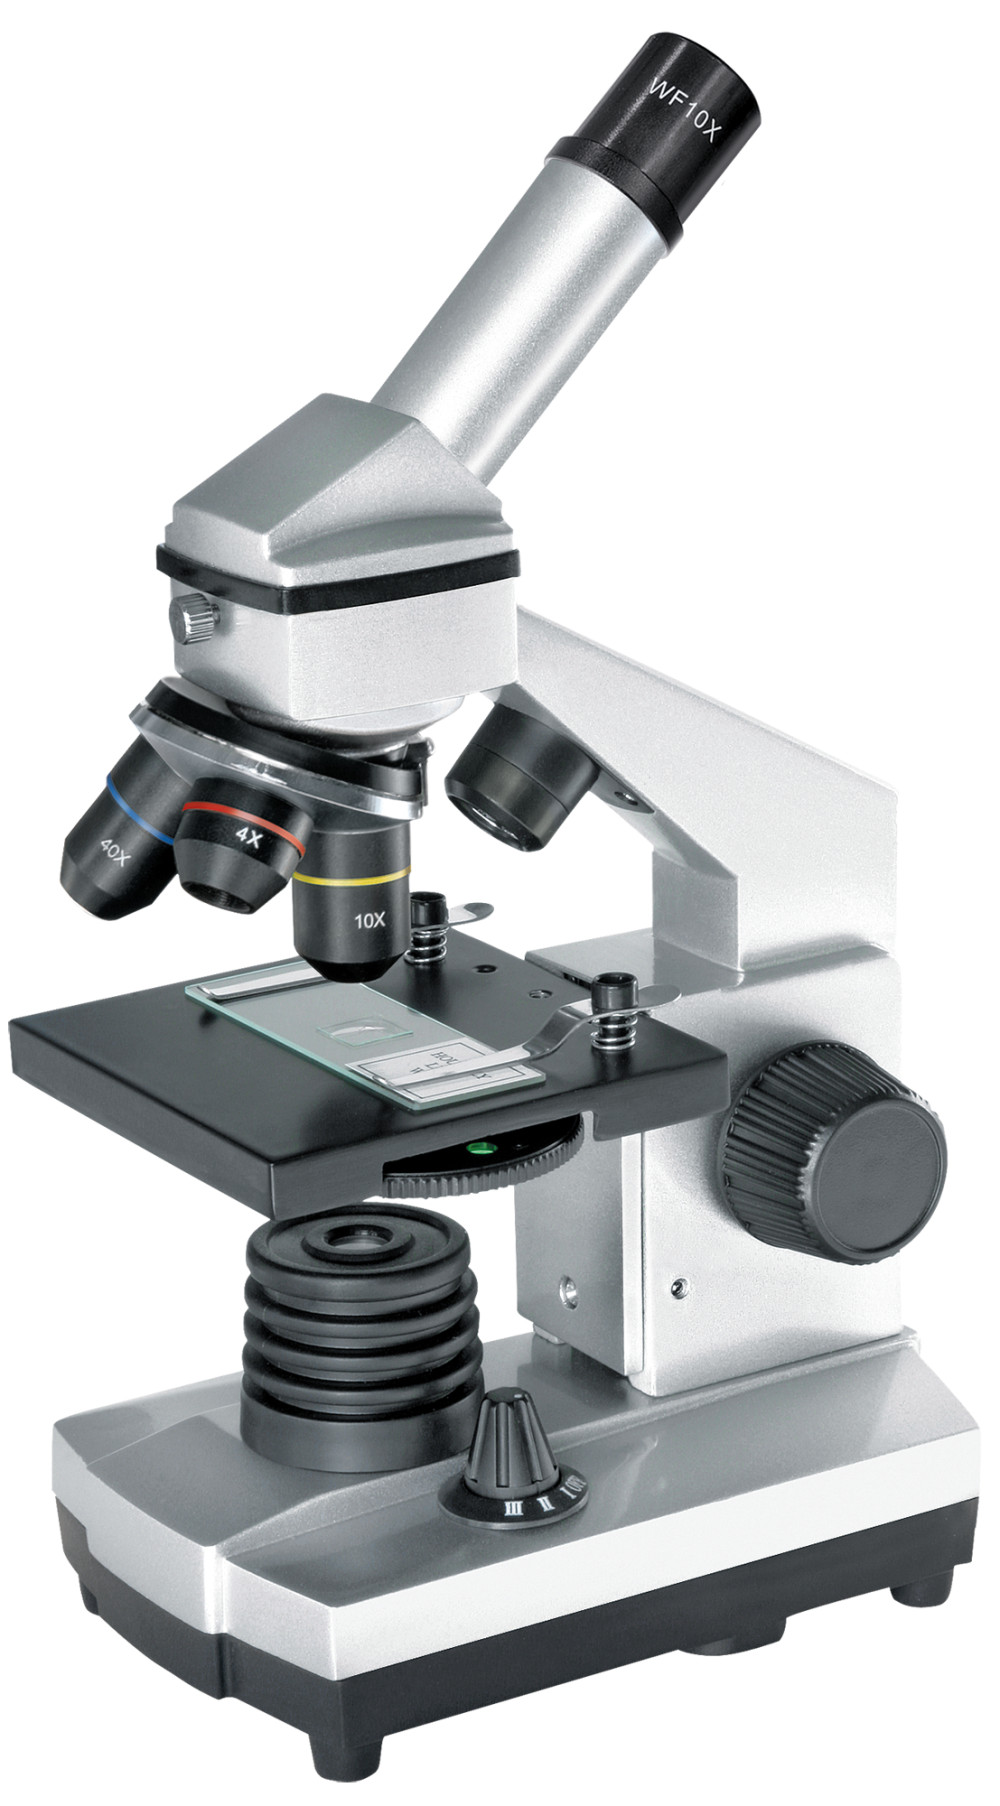 BRESSER JUNIOR Biolux CA 40x-1024x Microscope incl. Smartpho | Ferngläser & Optik